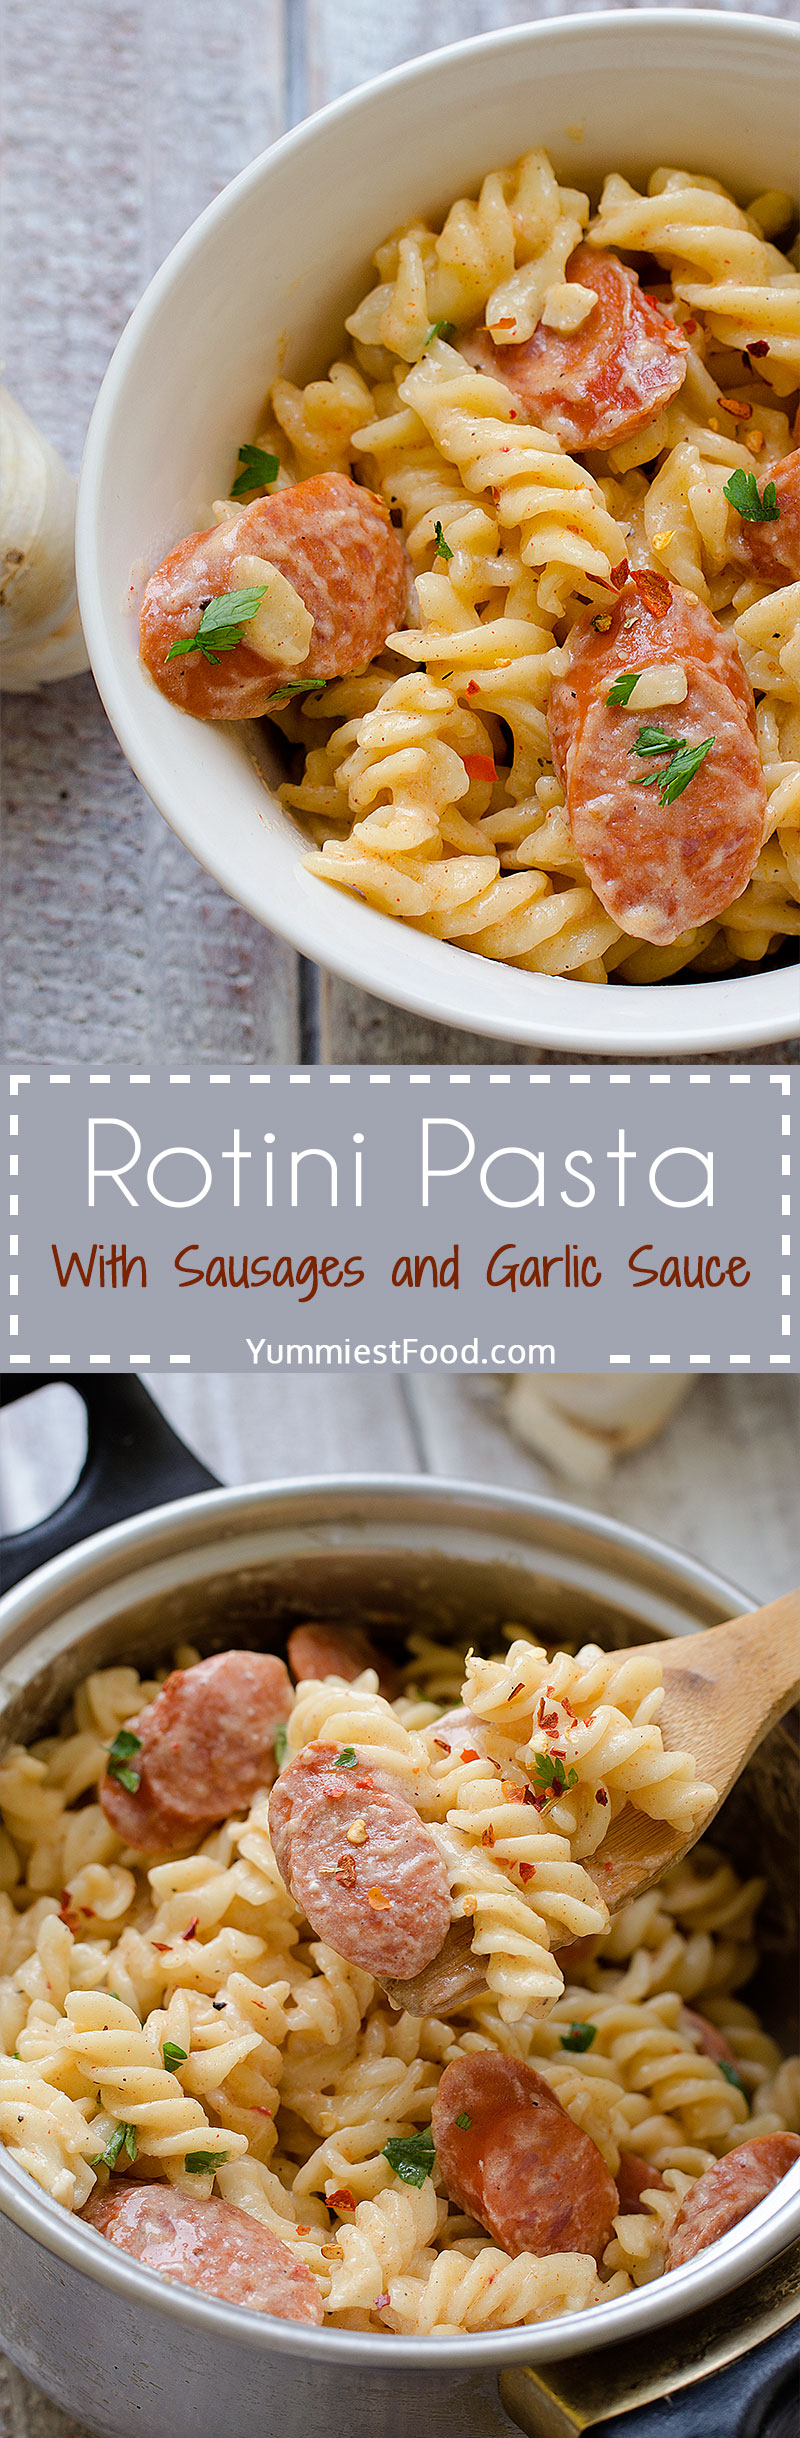 Rotini Pasta With Sausages and Garlic Sauce